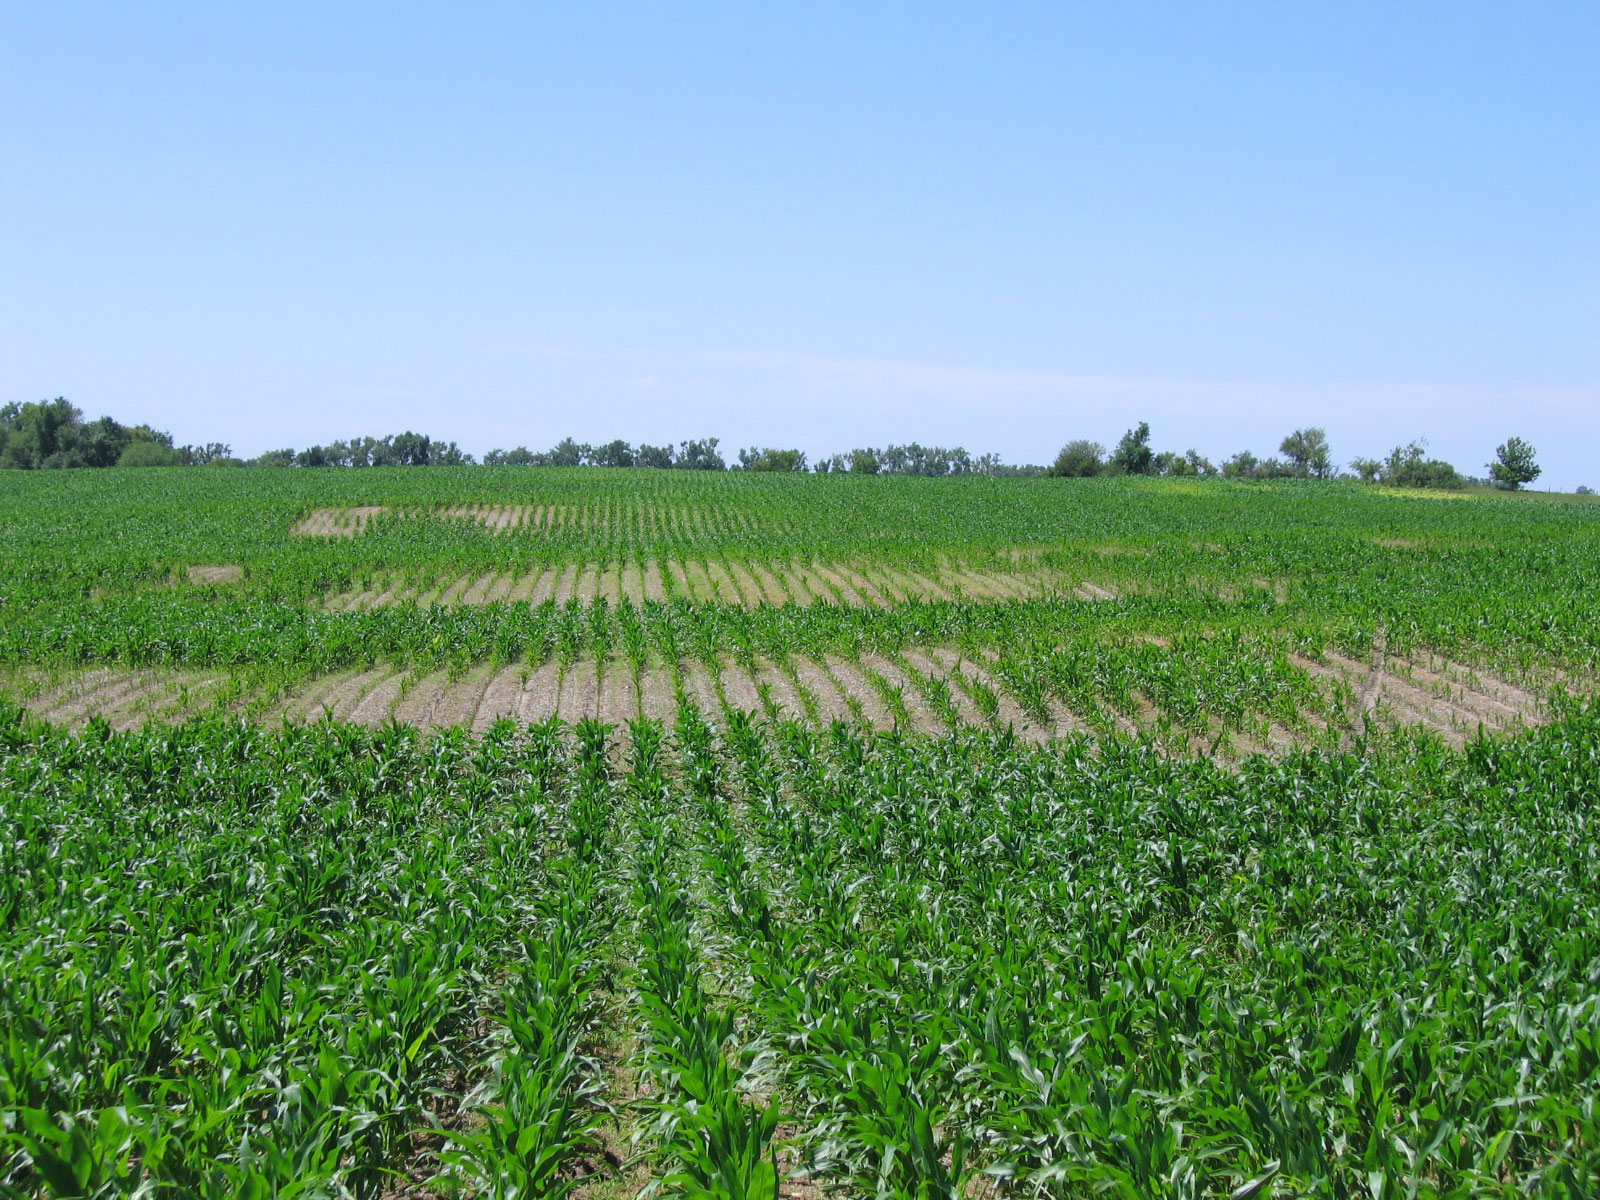  Corn nematode damage in Nebraska field